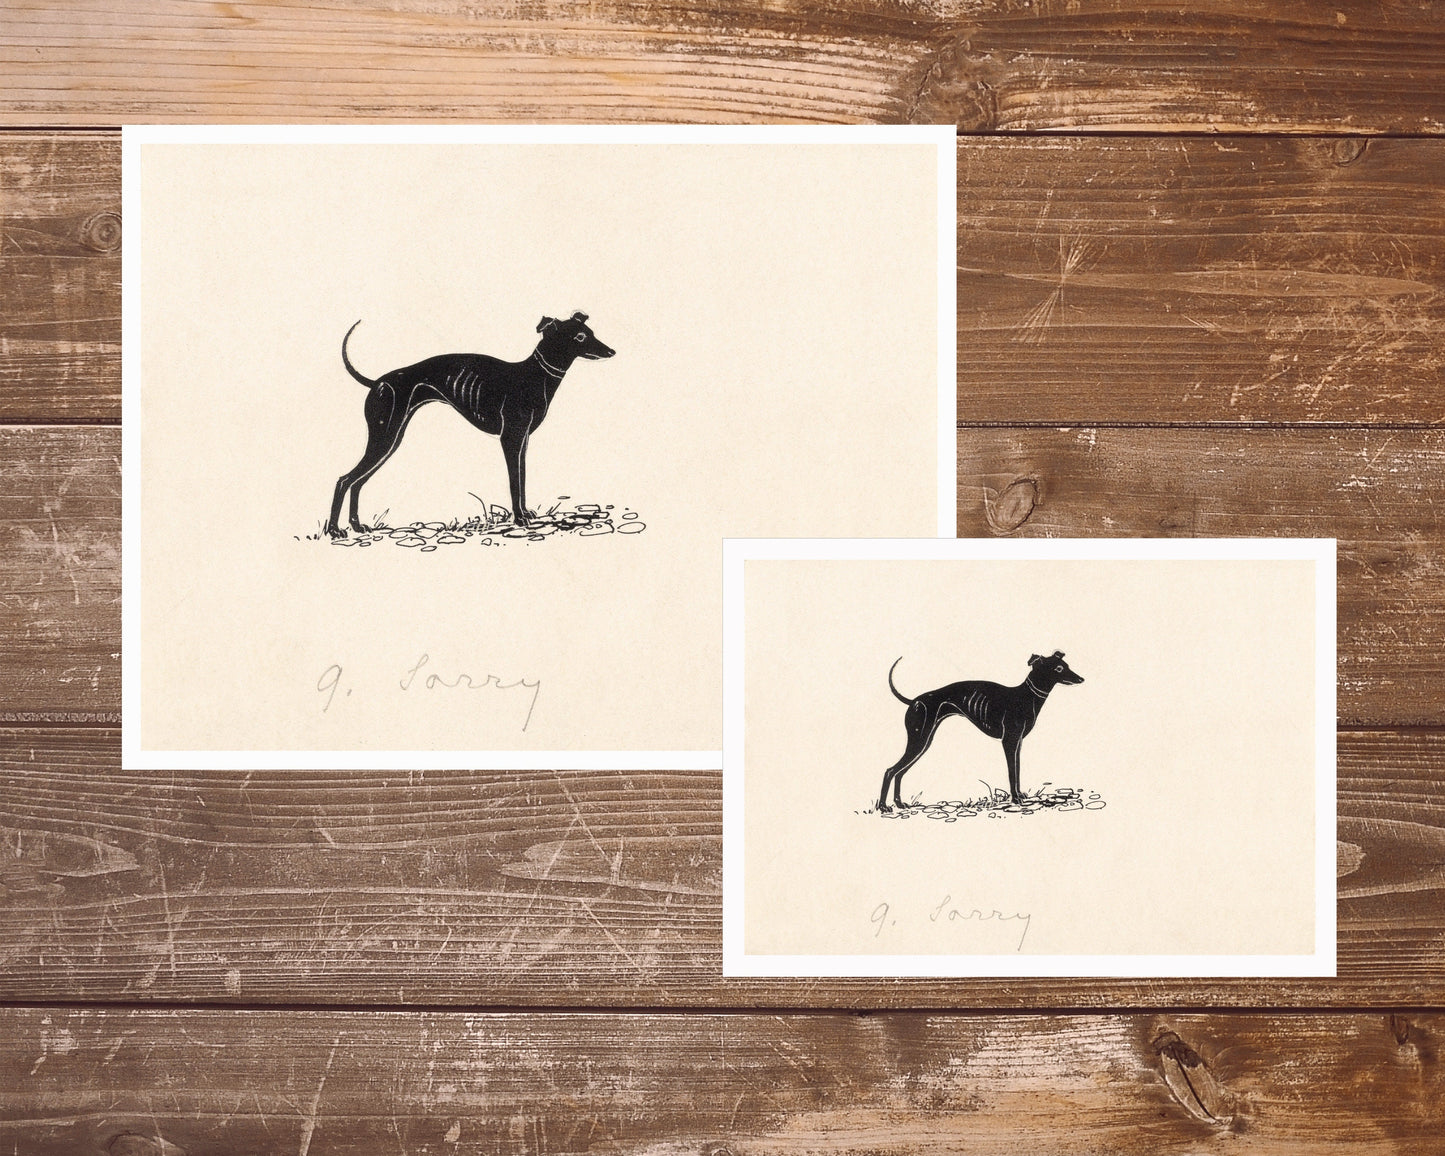 Vintage dog fine art print | Greyhound art | Canine illustration |  Modern vintage décor | Ready to frame & gift